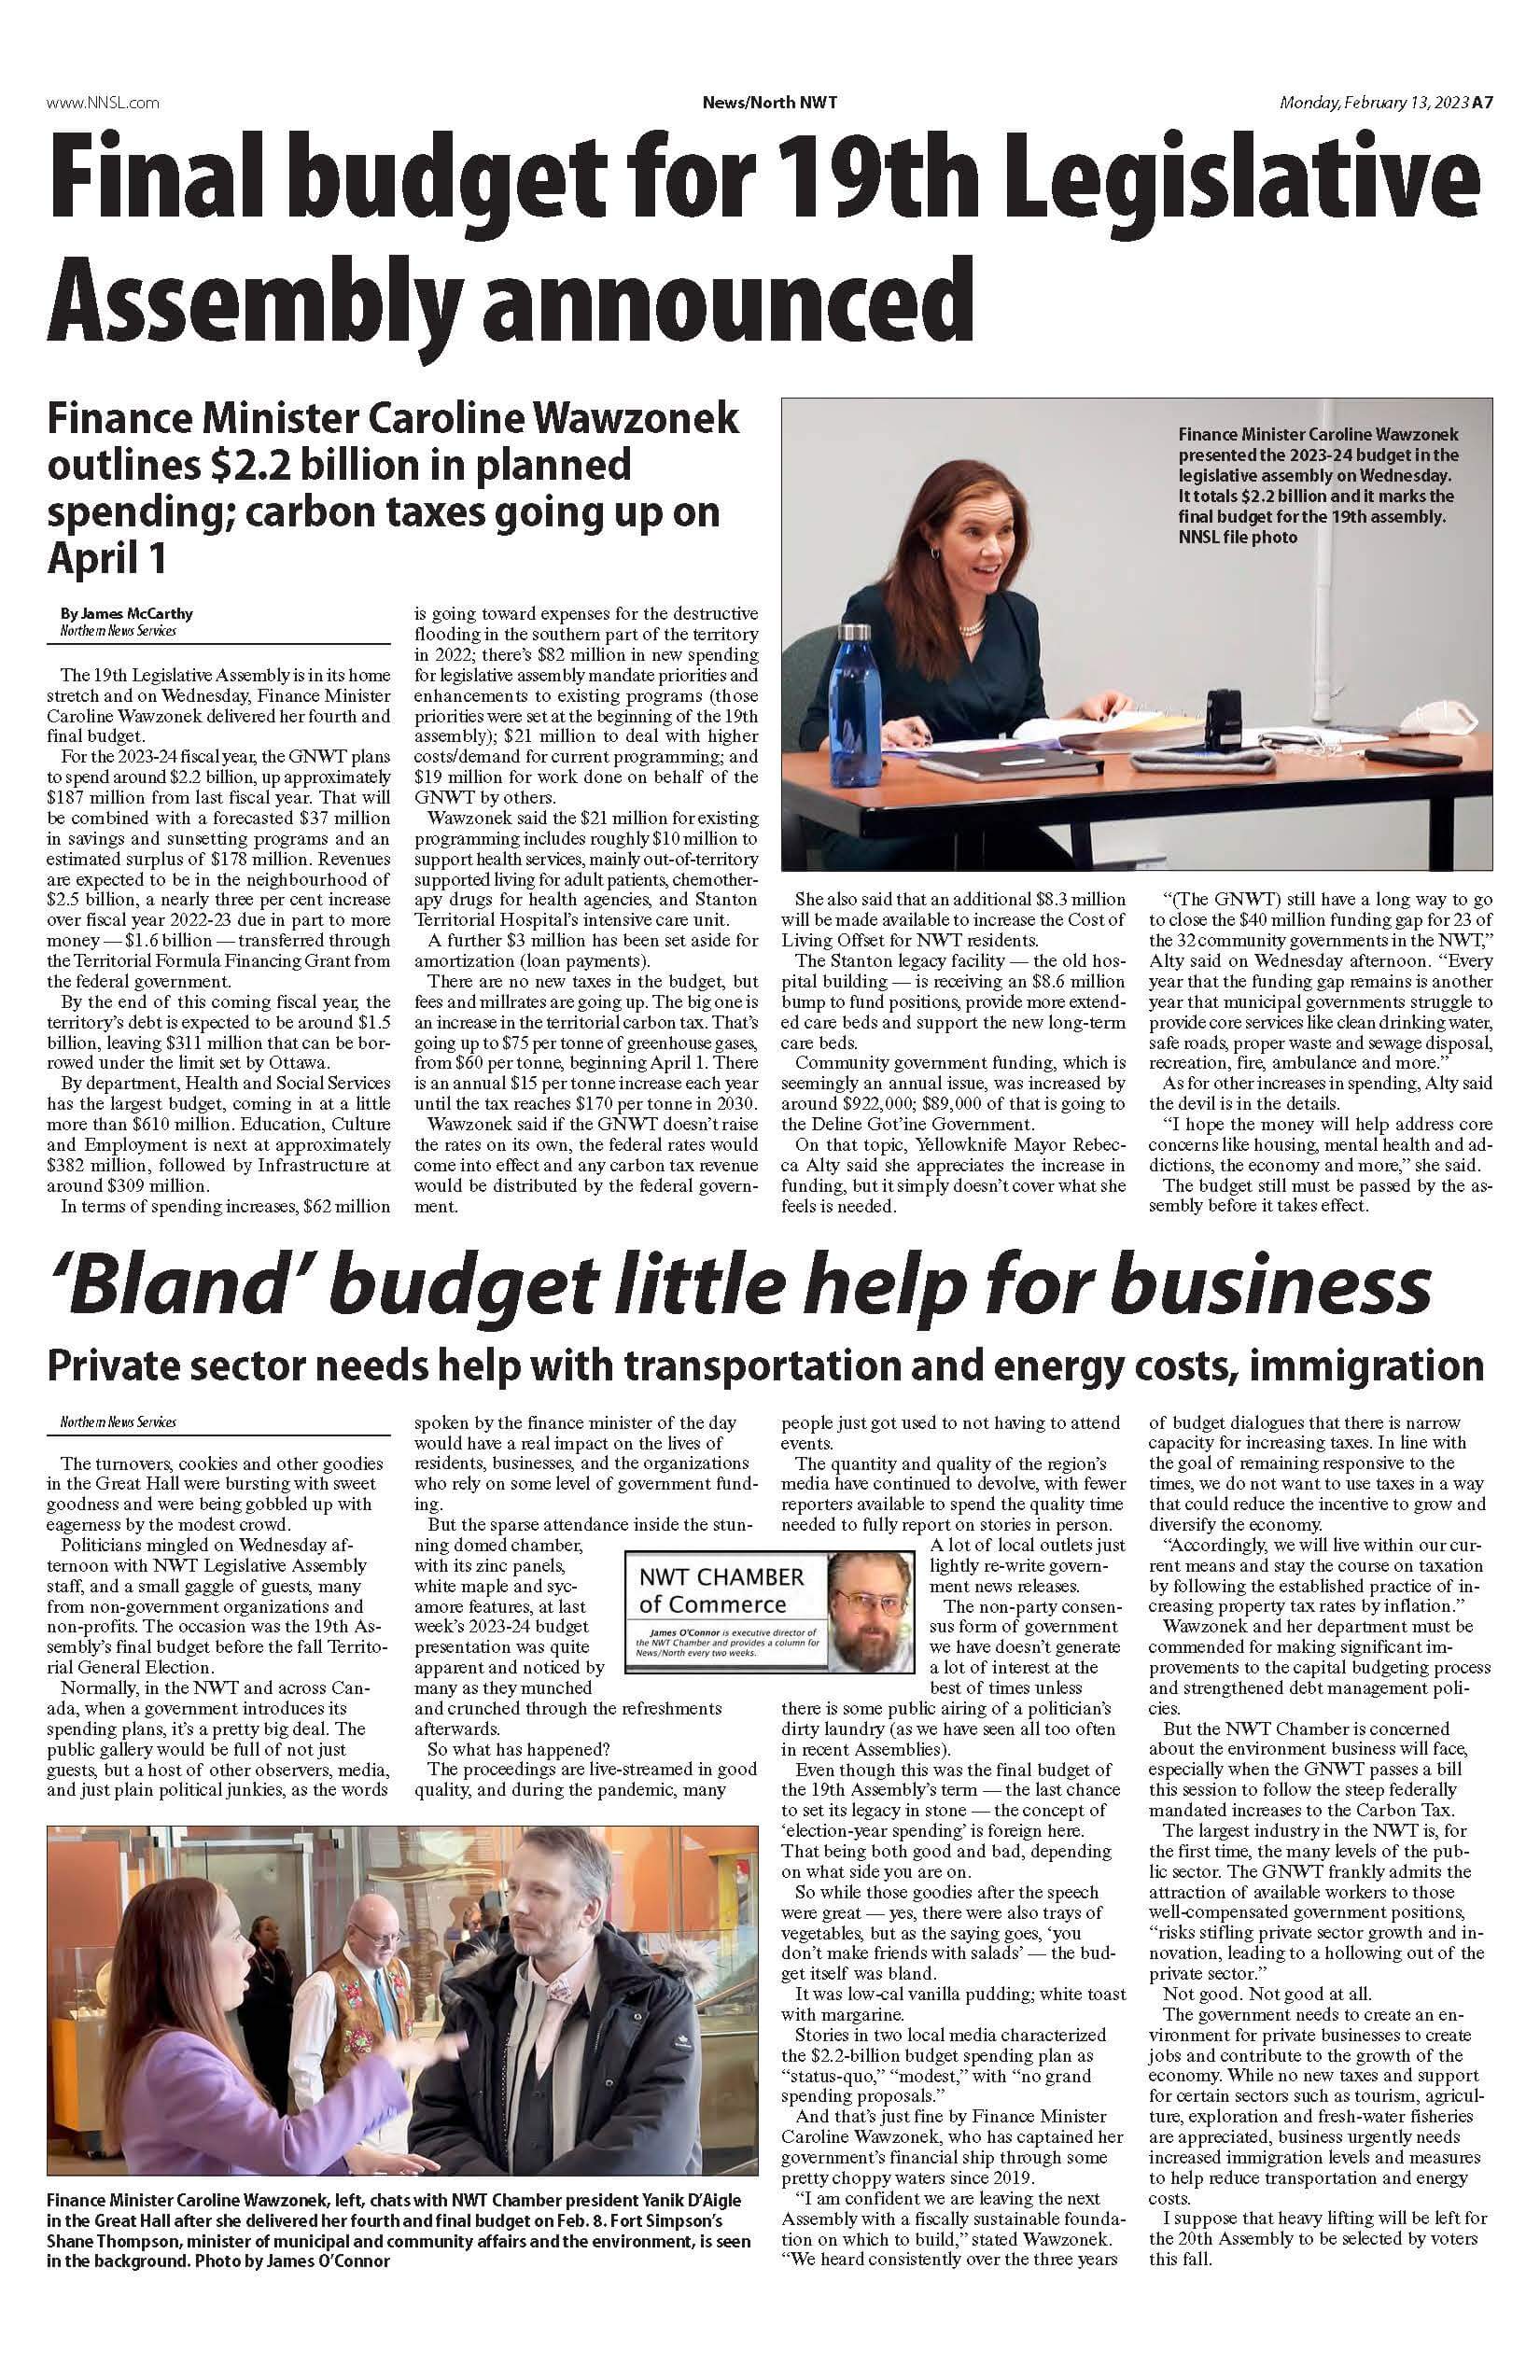 Page column News-North-Feb.-13 2